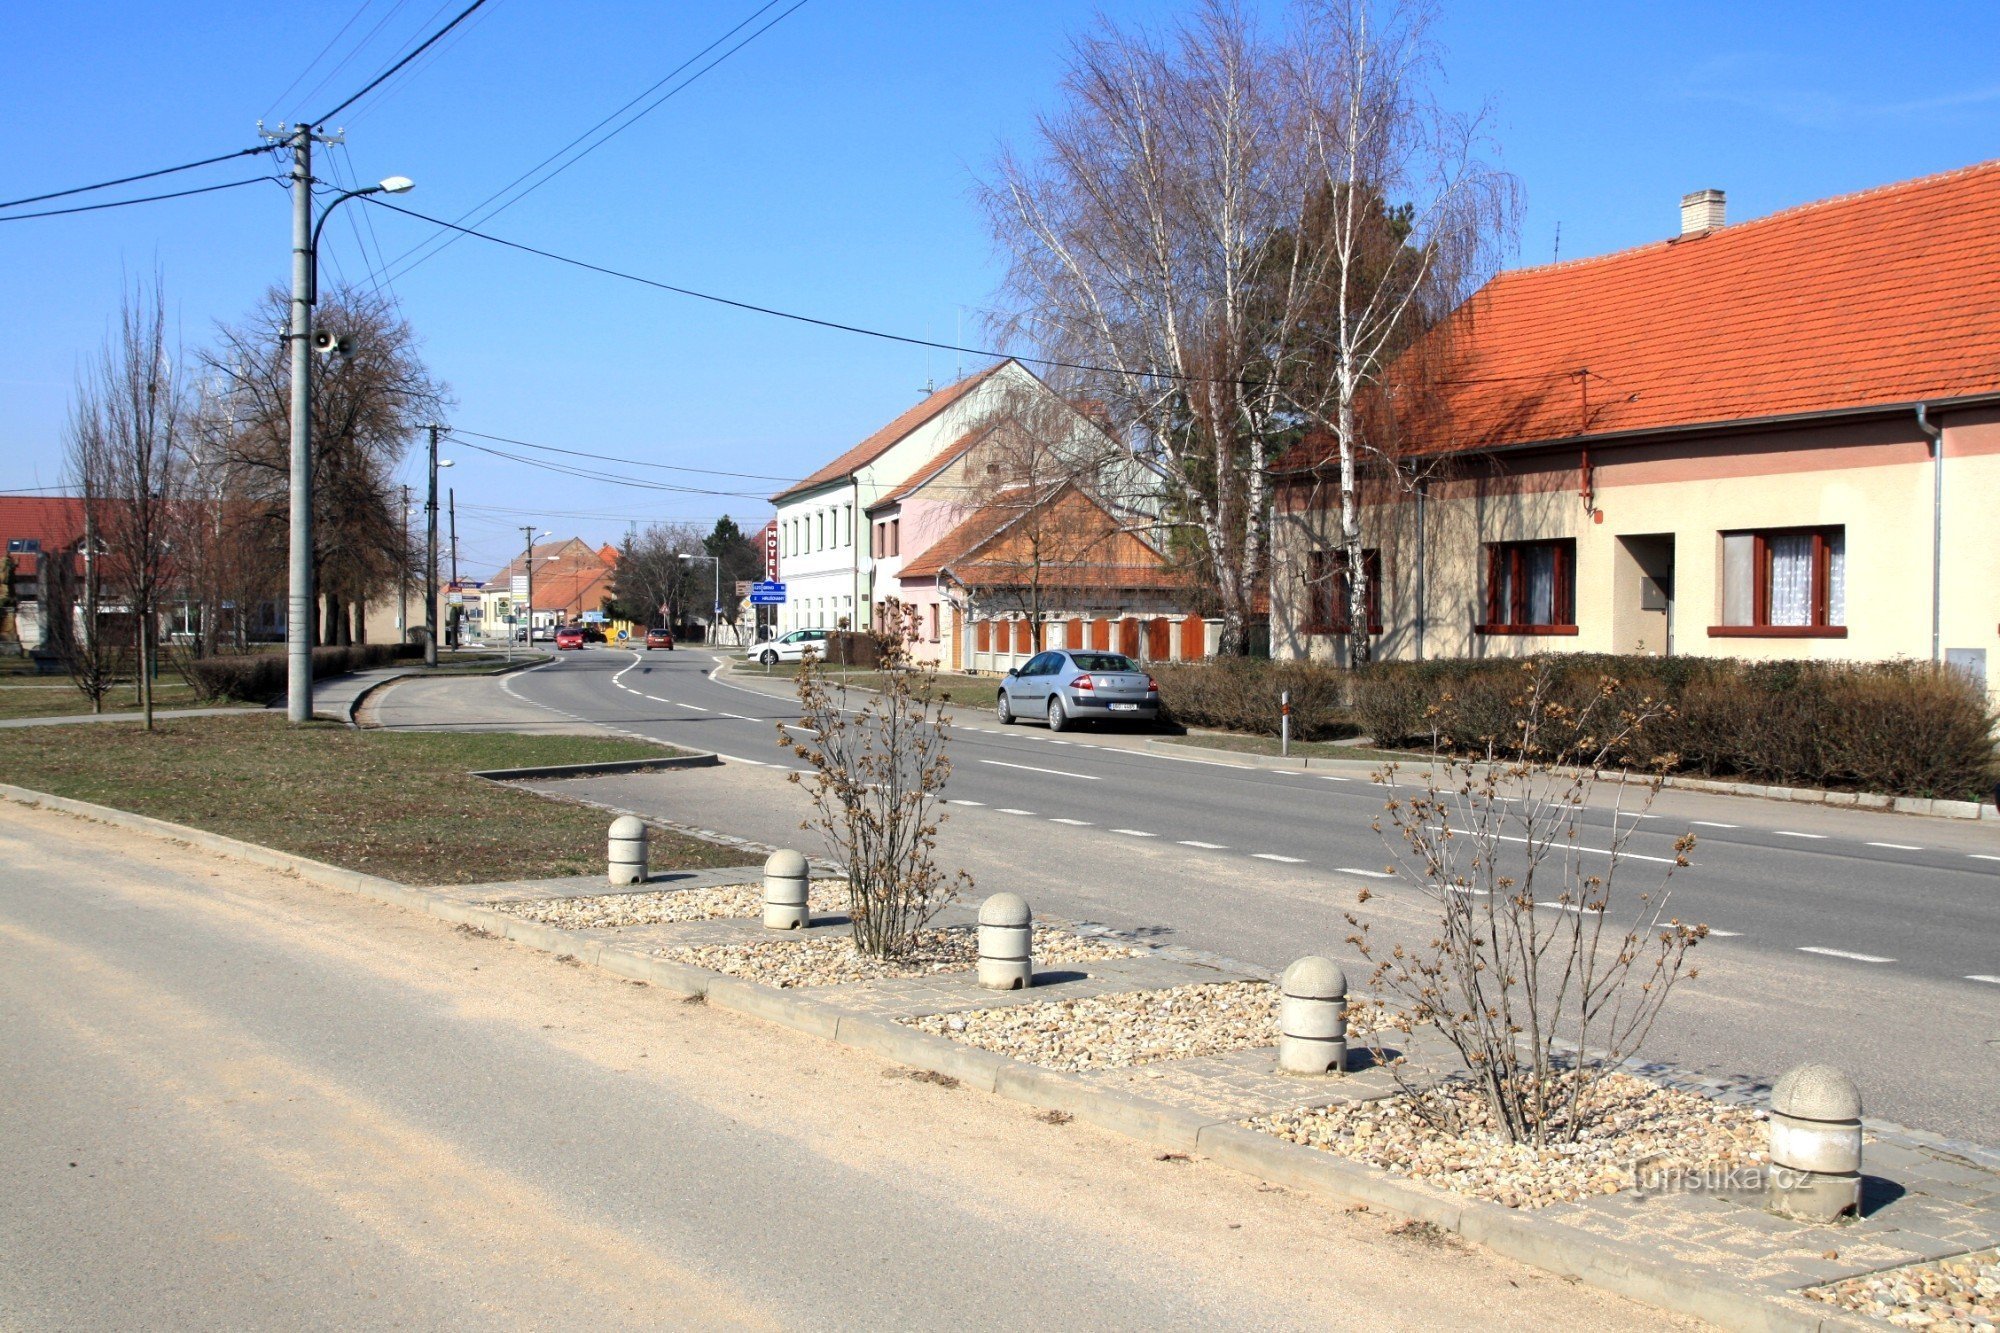 La rue principale de Vojkovice